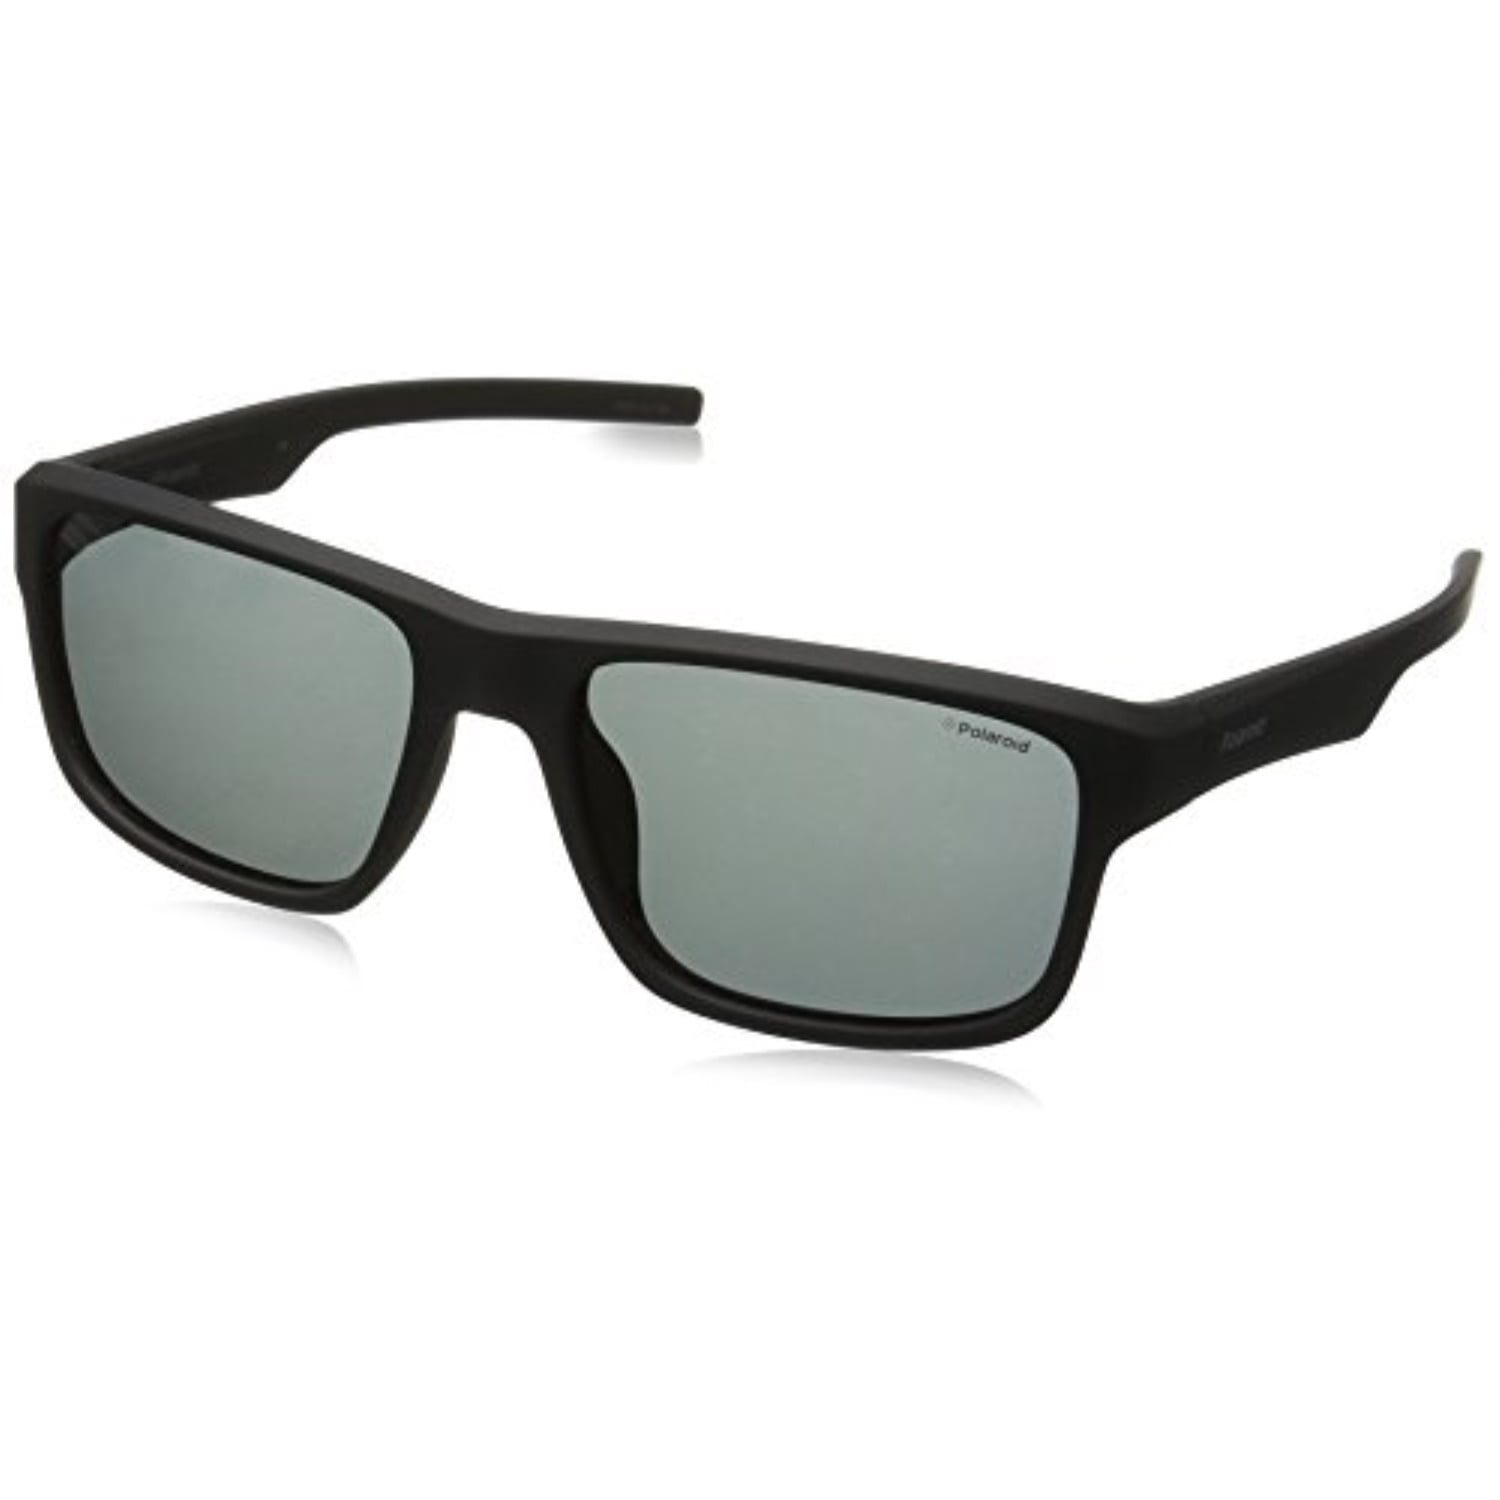 Polaroid Sunglasses - polaroid sunglasses men's pld3018s rectangular